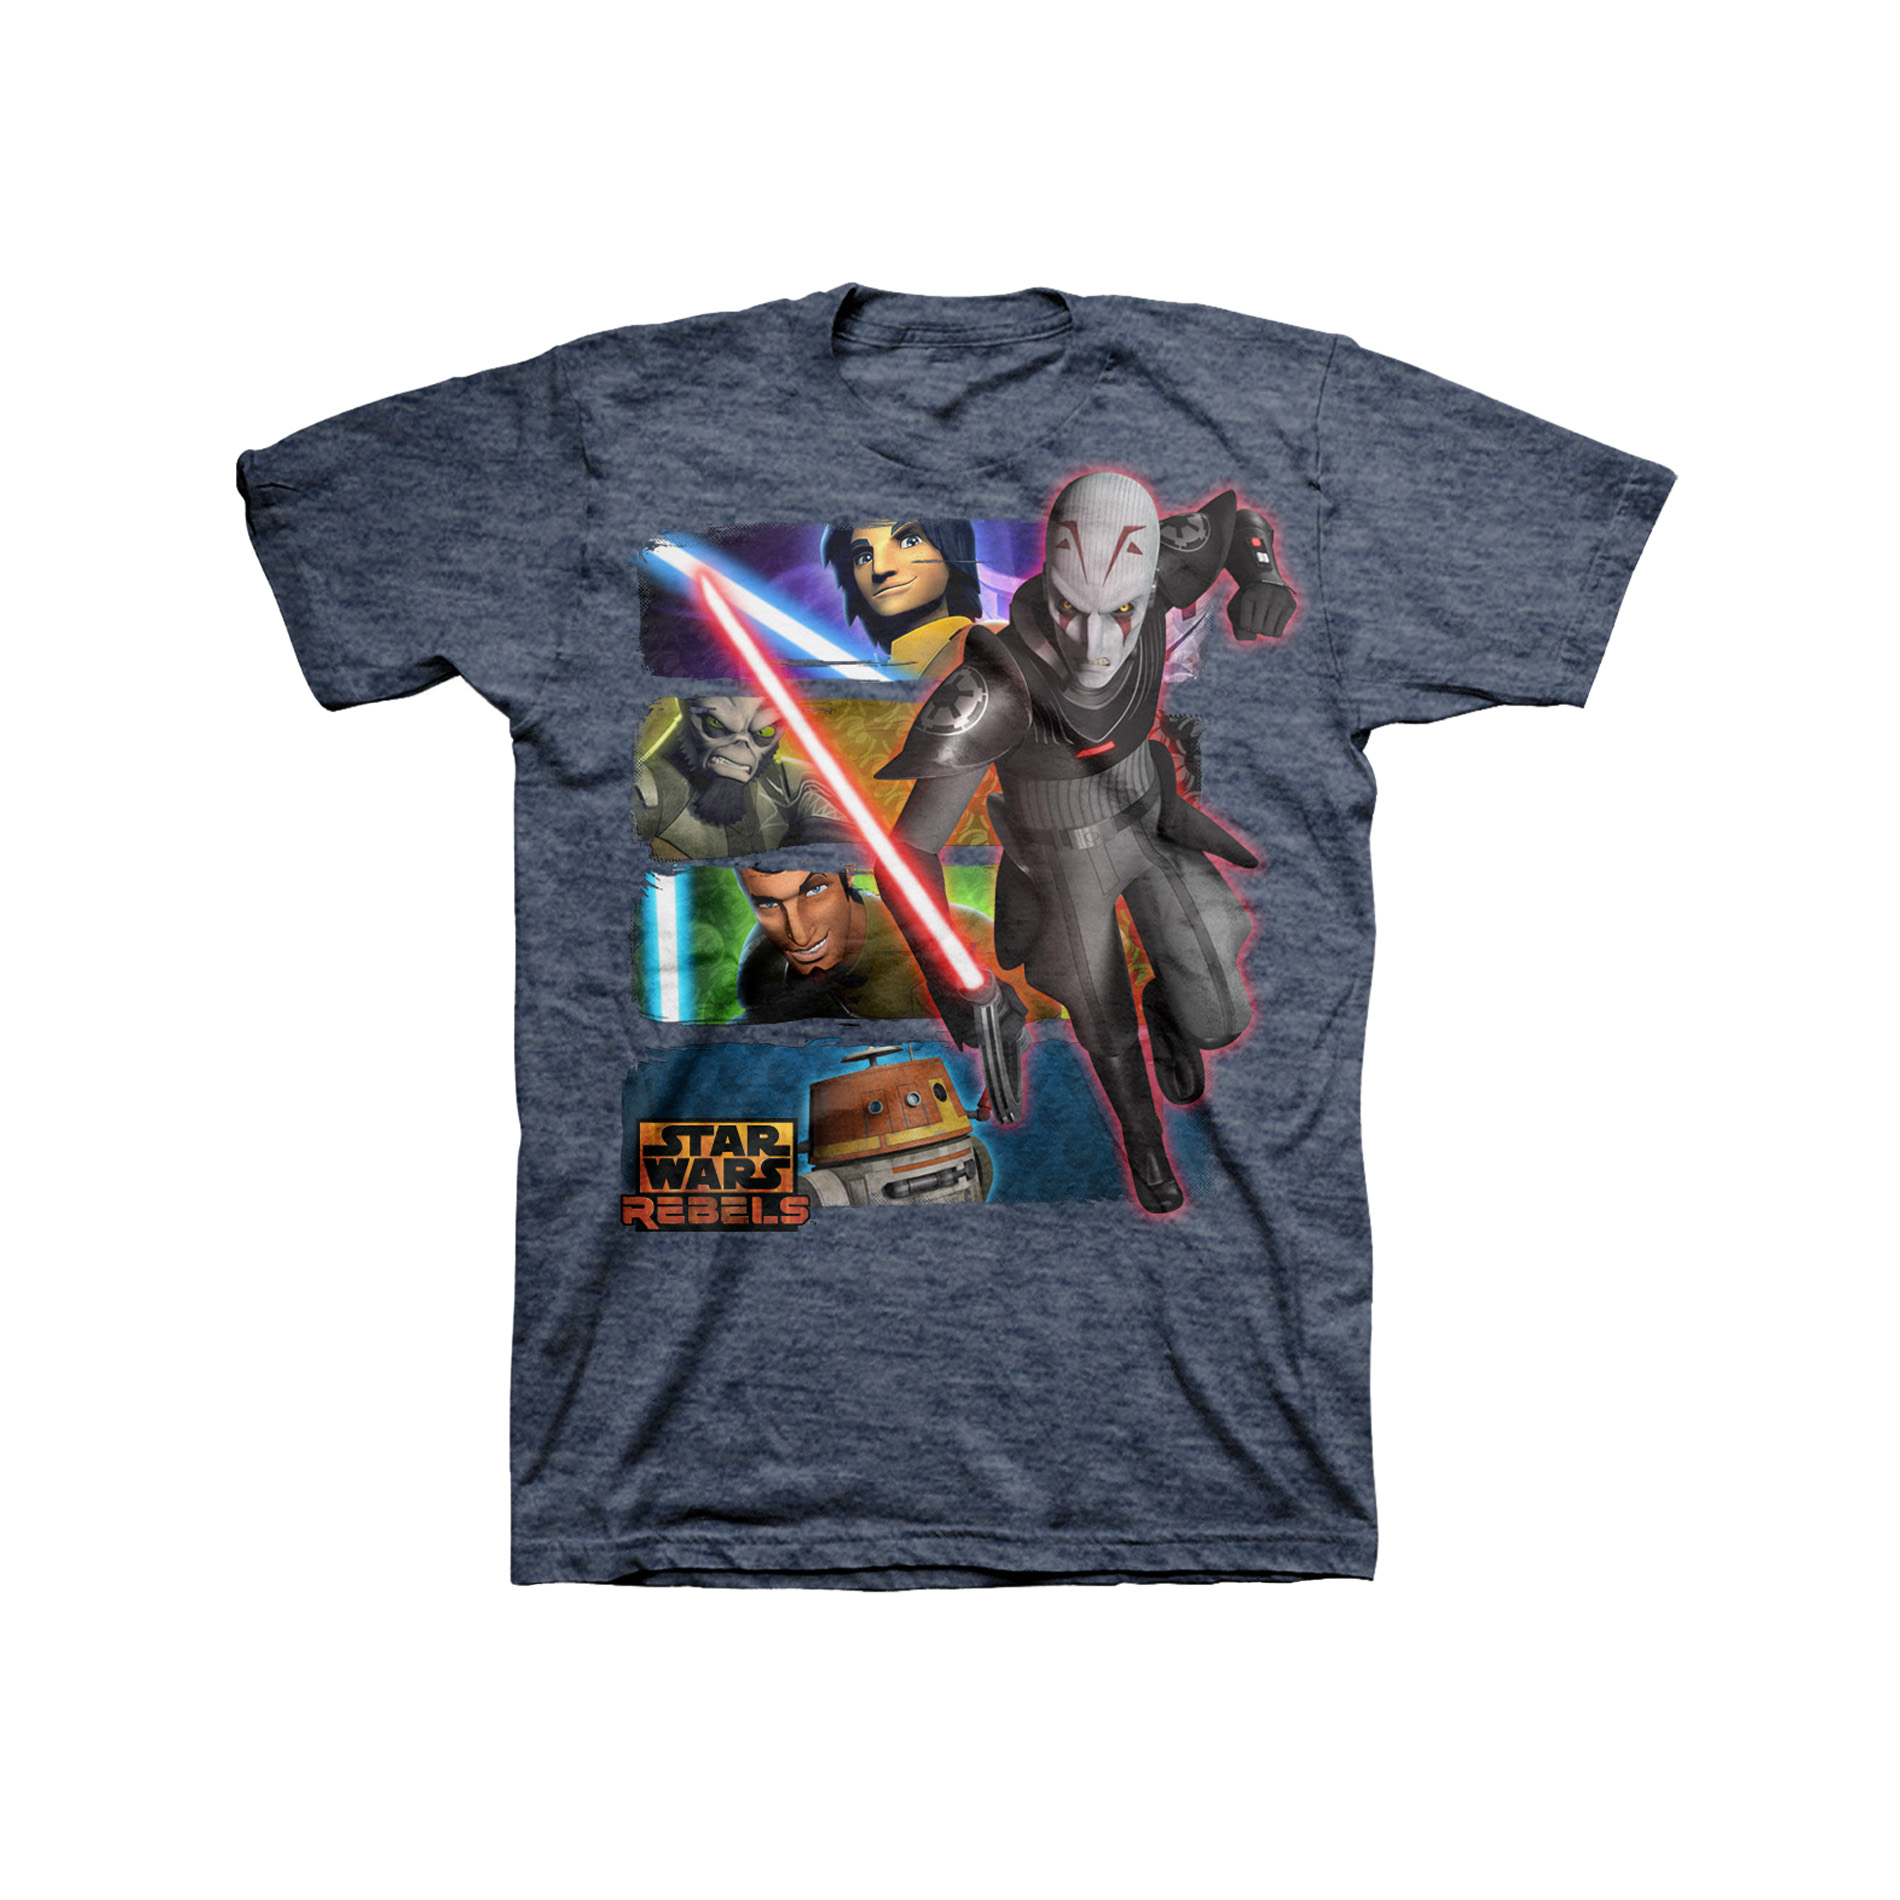 Star Wars Rebels Boy's T-shirt